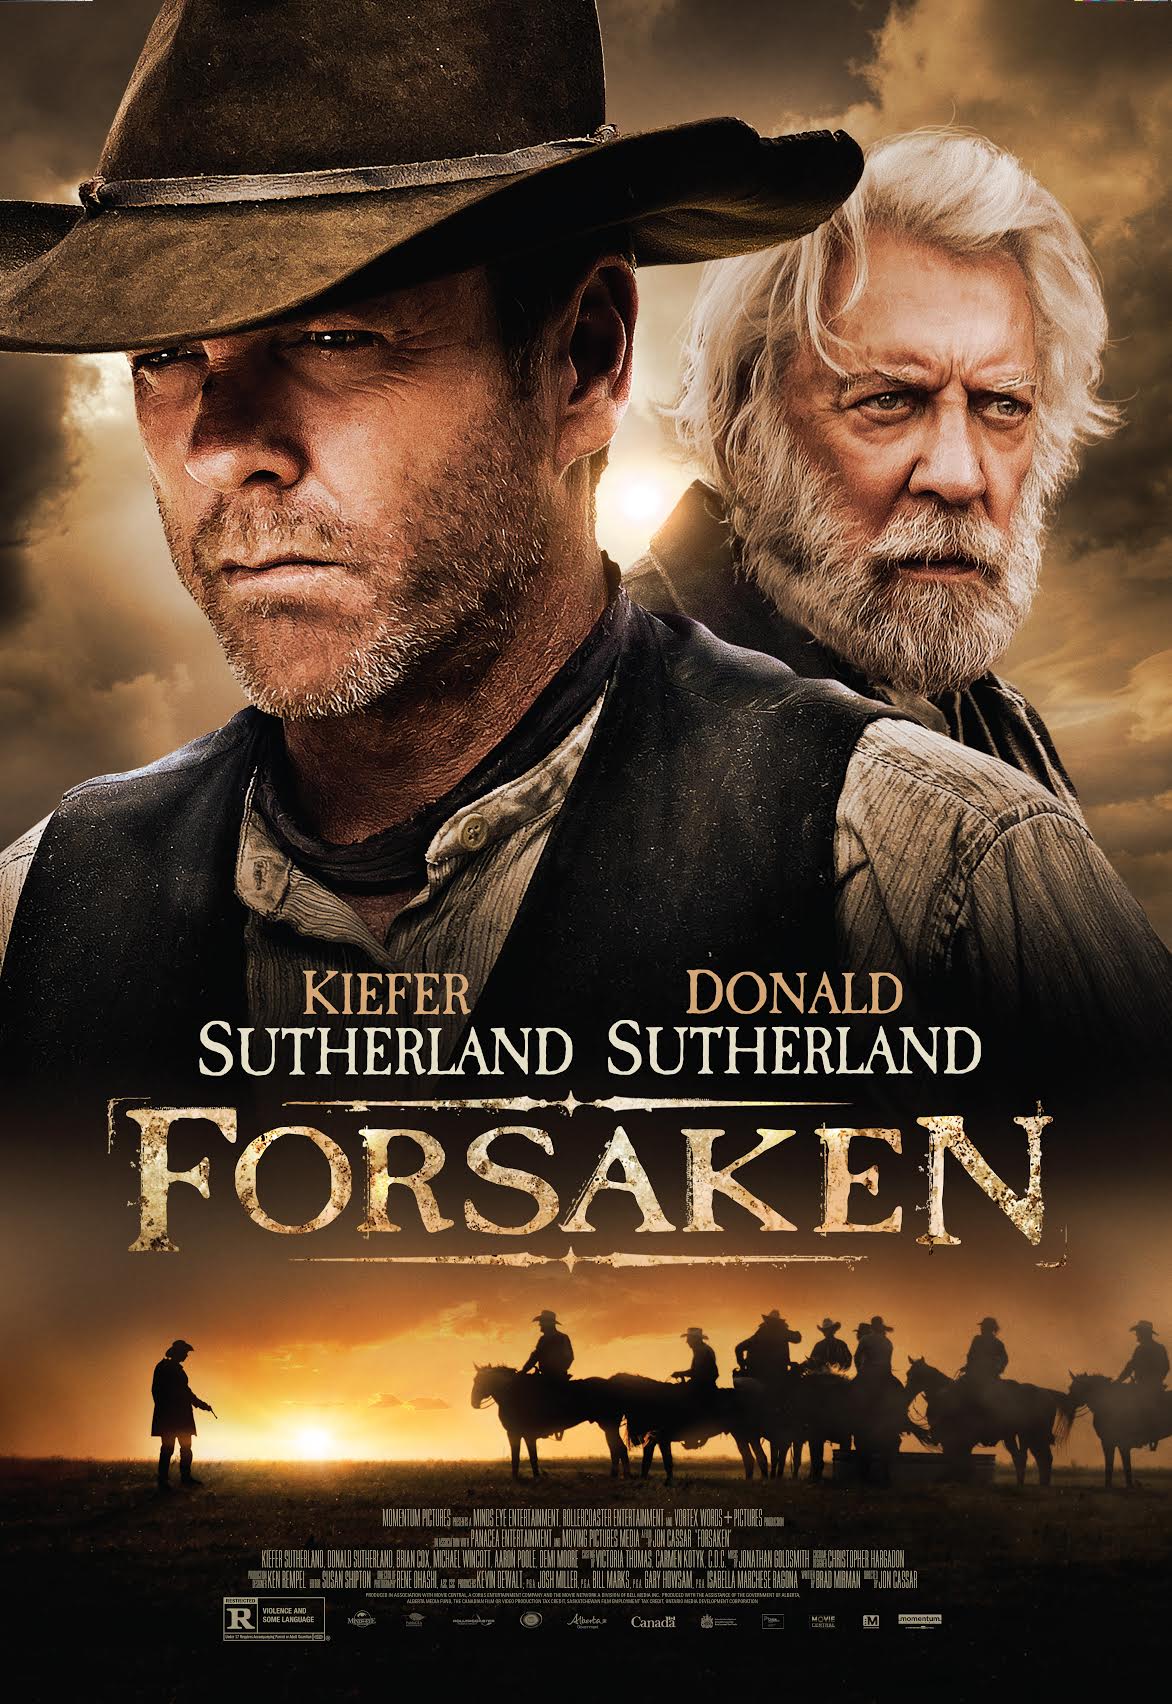 Stiahni si Filmy s titulkama  	Zatrateny / Forsaken (2015) = CSFD 60%